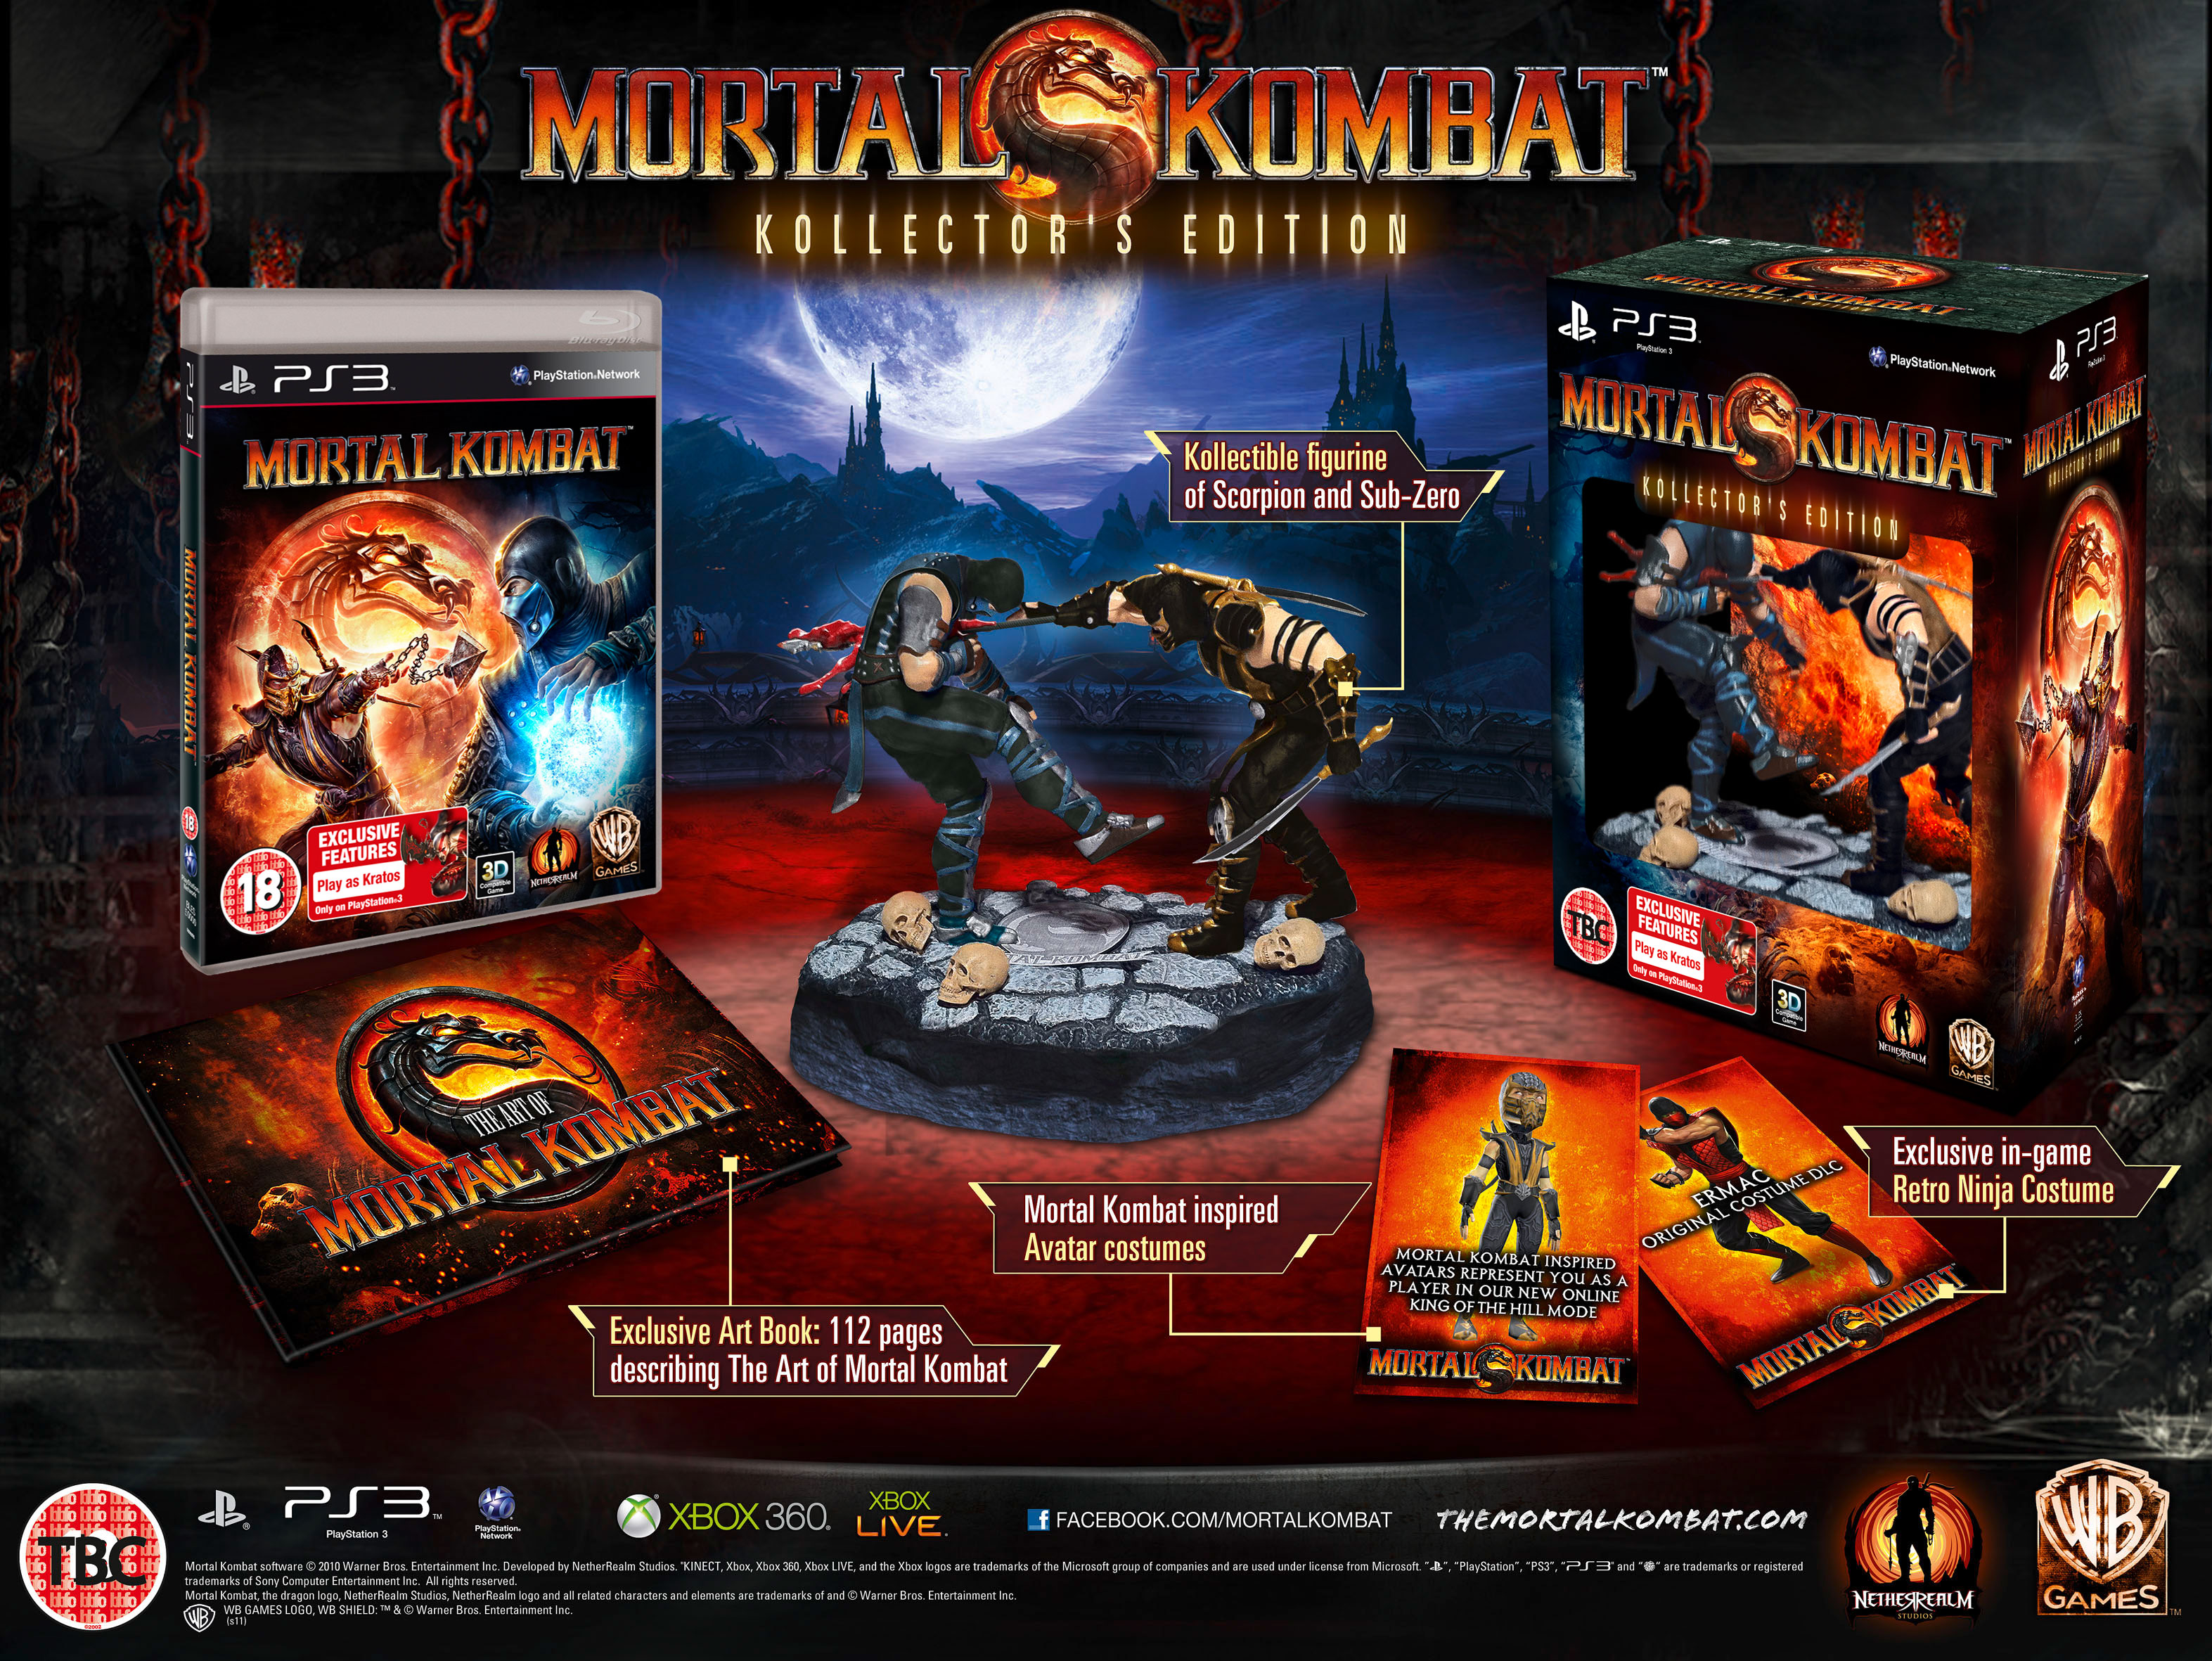 Коллектор мортал комбат. Фигурка Mortal Kombat Collectors Edition ps3. Mortal Kombat 11 Ultimate Collector's Edition. Коллекционное издание мортал комбат 11 Скорпион. Mortal Kombat 2011 ps3 диск.